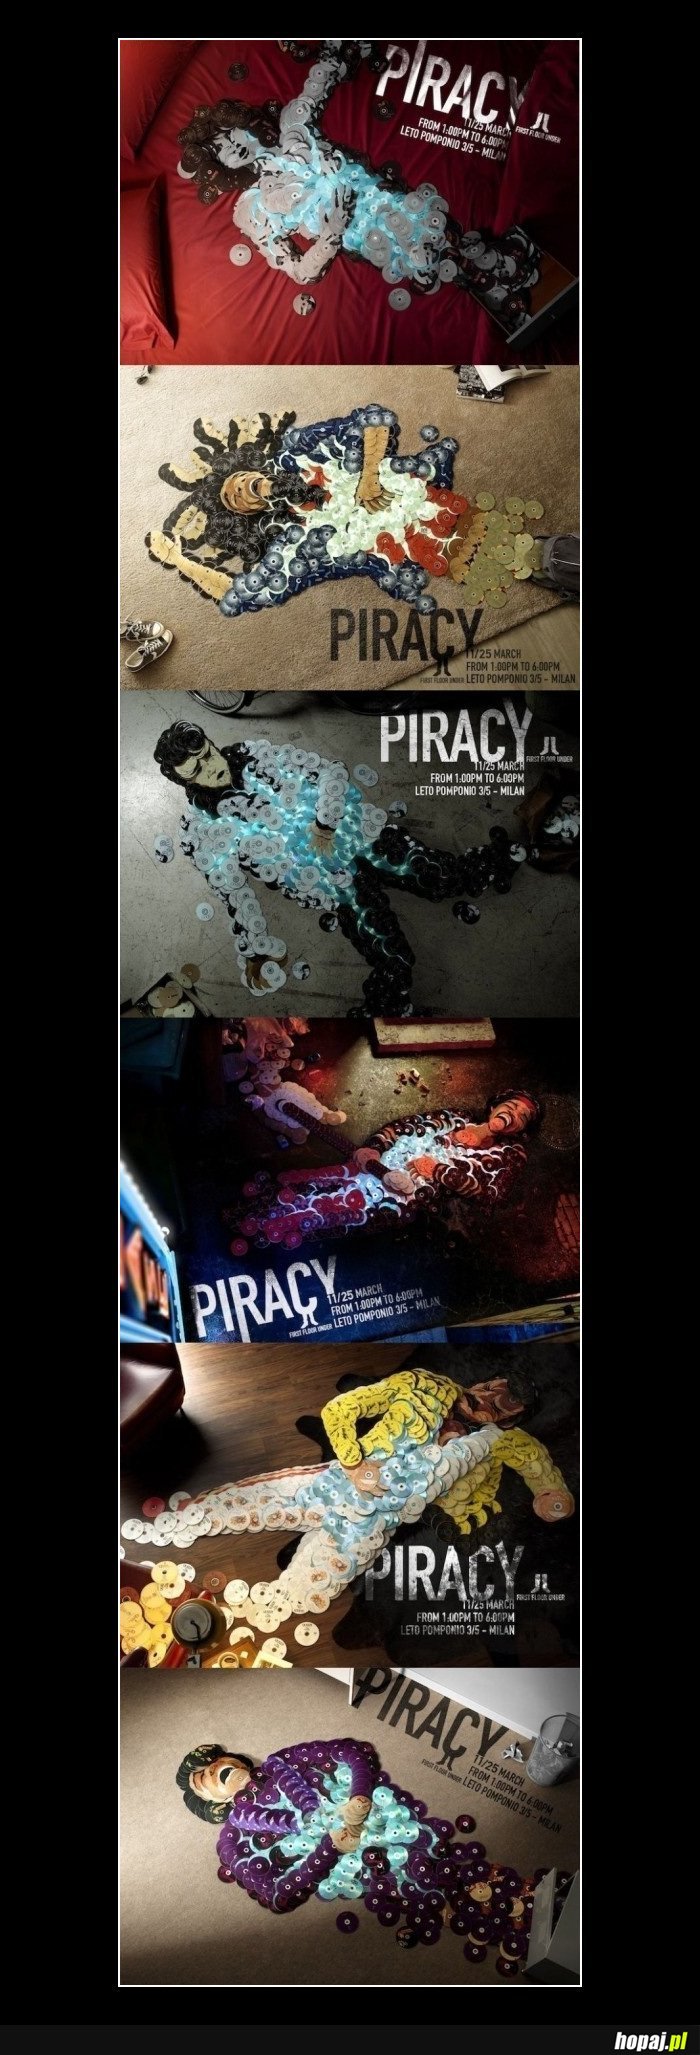 Piracy=crime